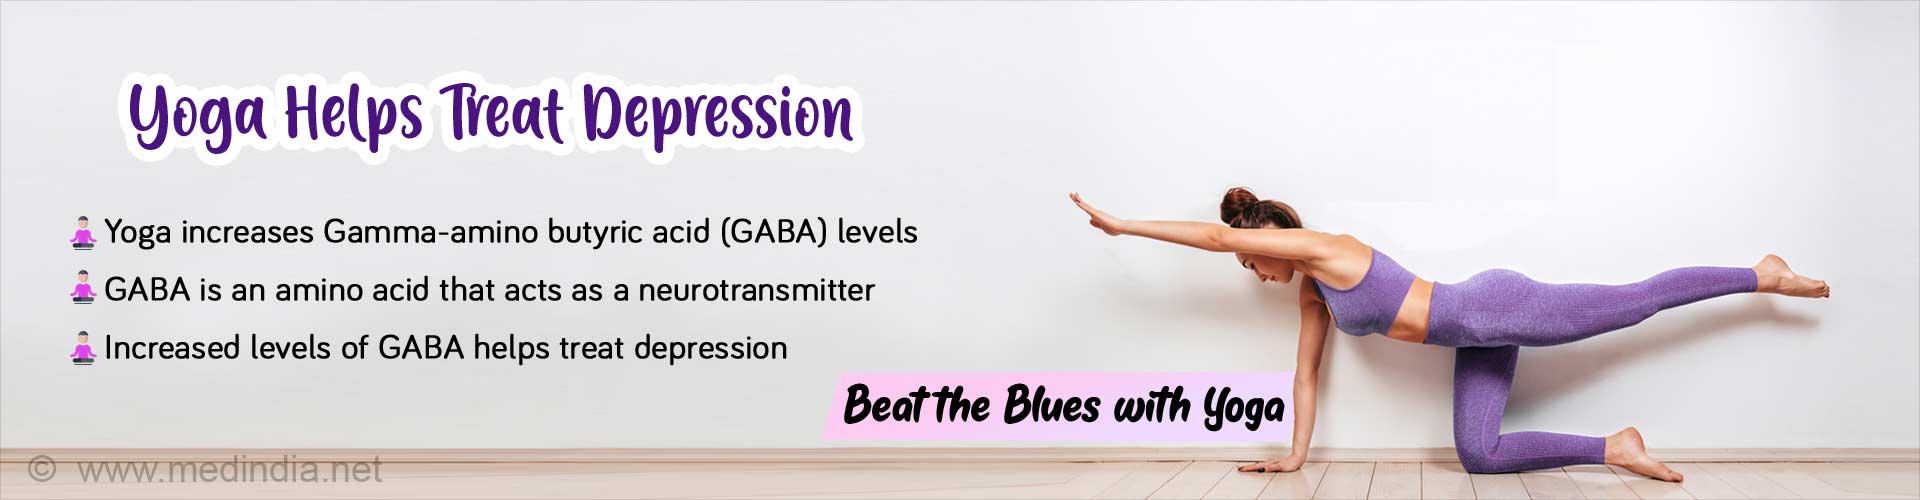 Yoga helps treat depression. Yoga increases Gamma-amino butyric acid (GABA) levels. GABA is an amino acid that acts as a neurotransmitter. Increased levels of GABA helps treat depression. ‘Beat the Blues with Yoga''